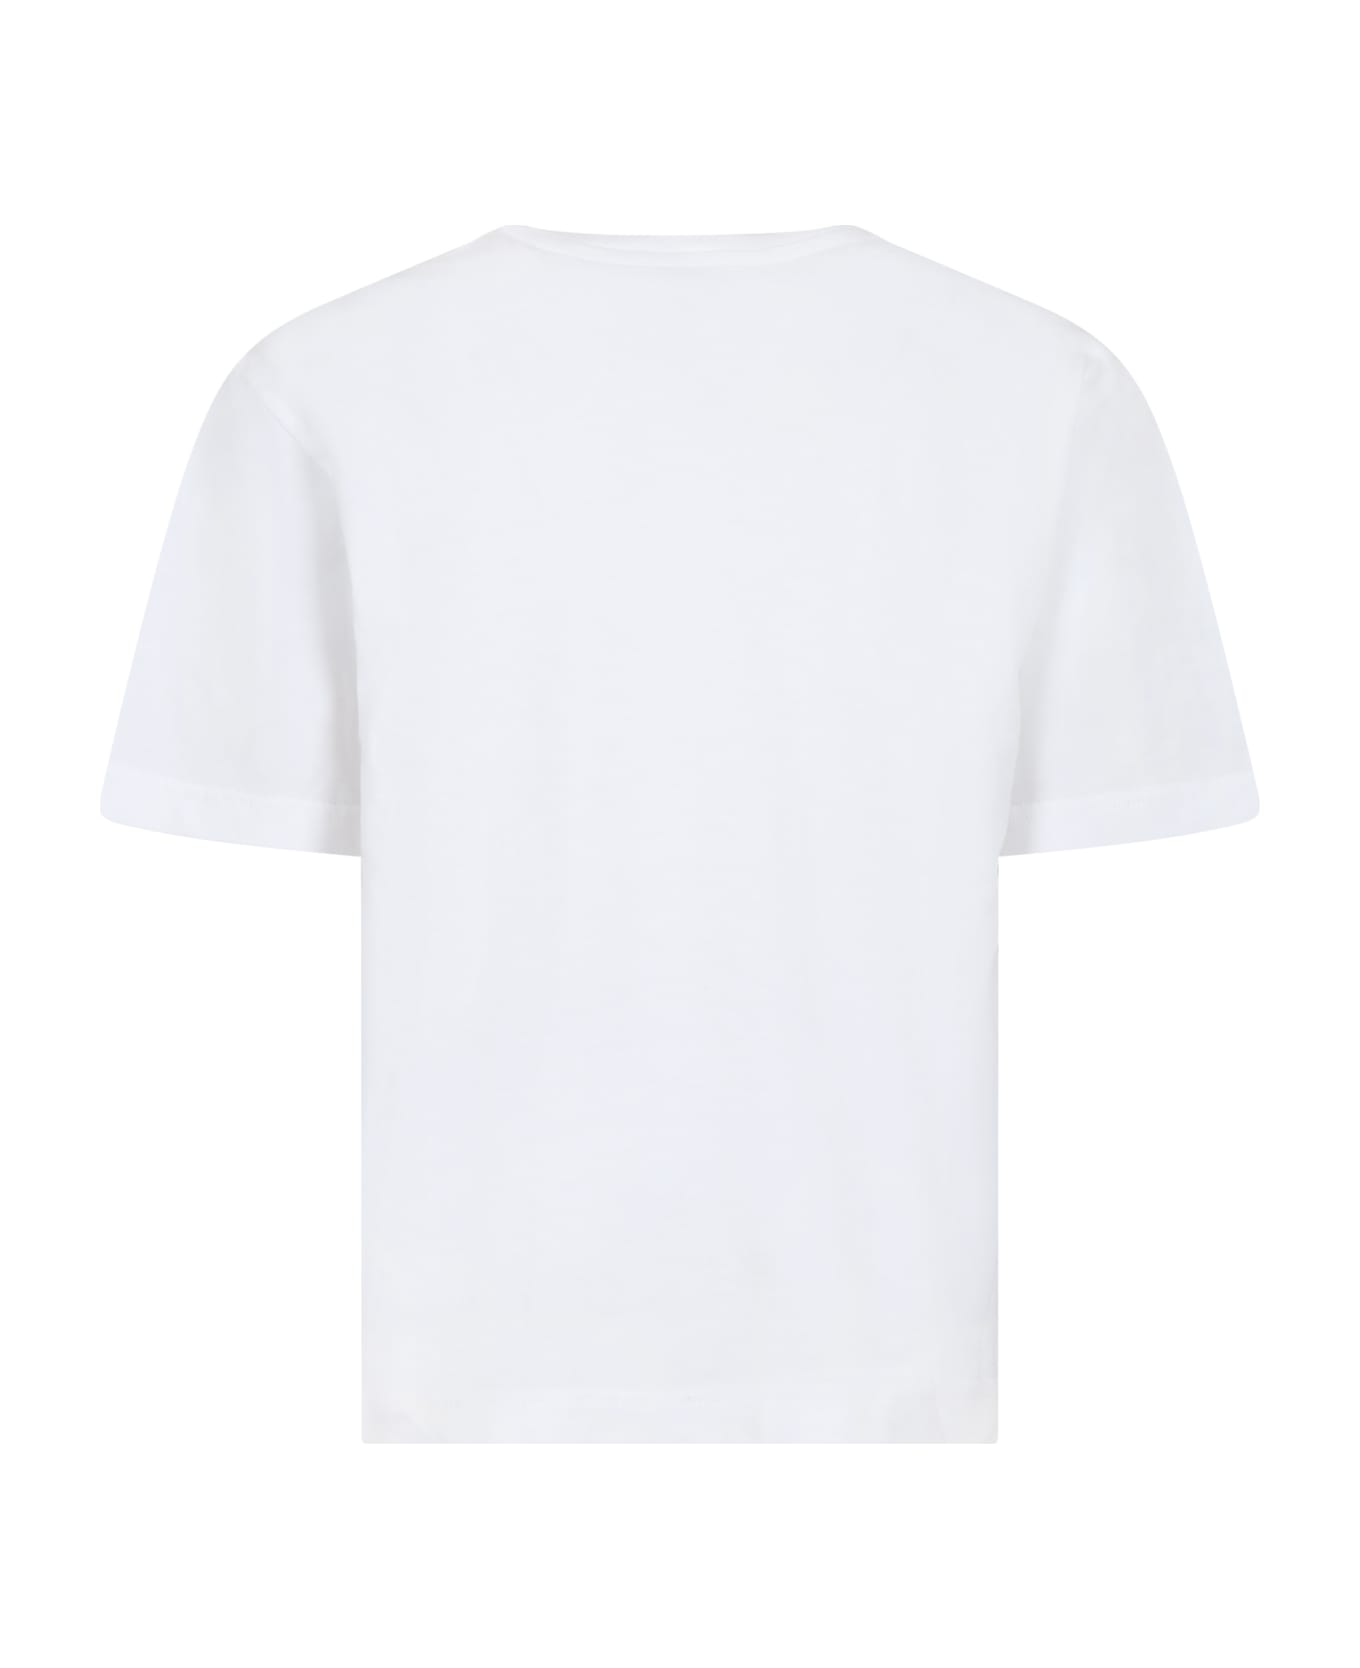 Dolce & Gabbana Whit T-shirt Shorts For Boy With Iconic Monogram - White